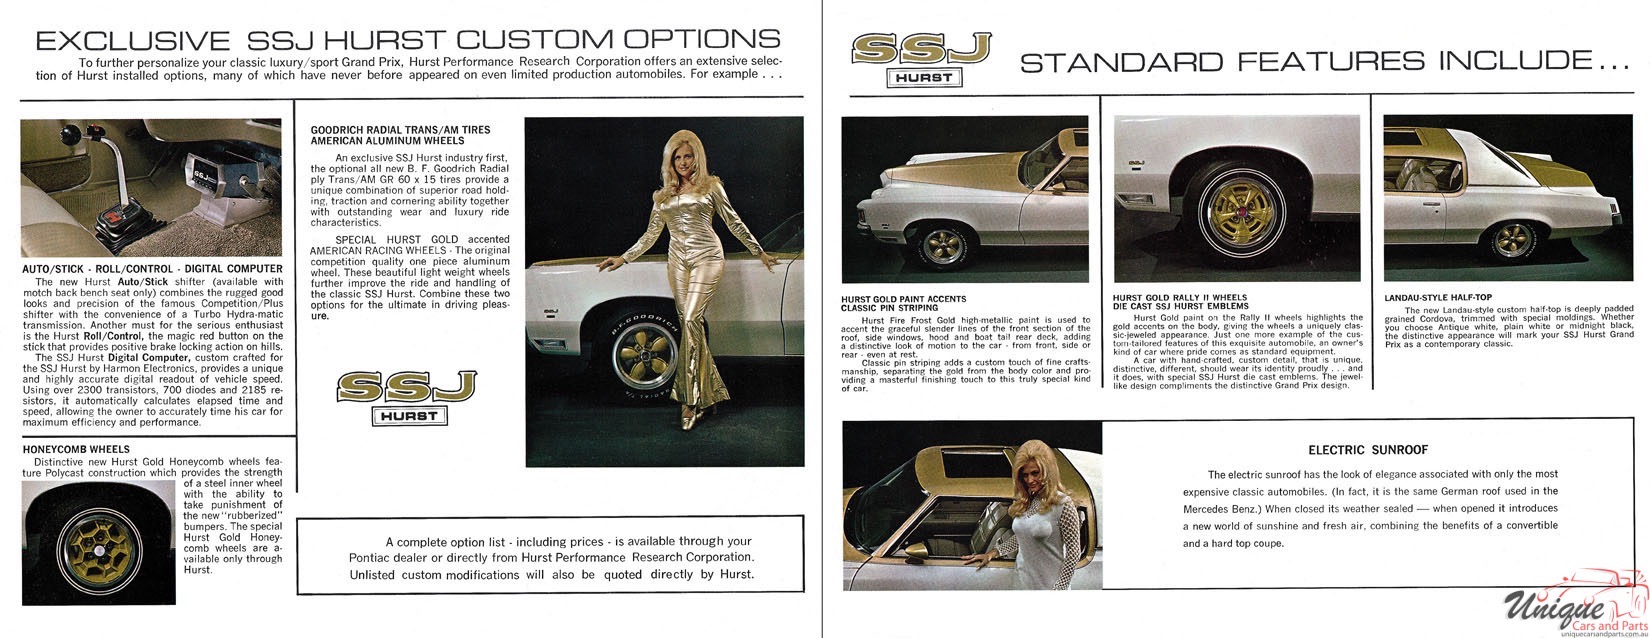 1971 Pontiac Hurst Brochure Page 1